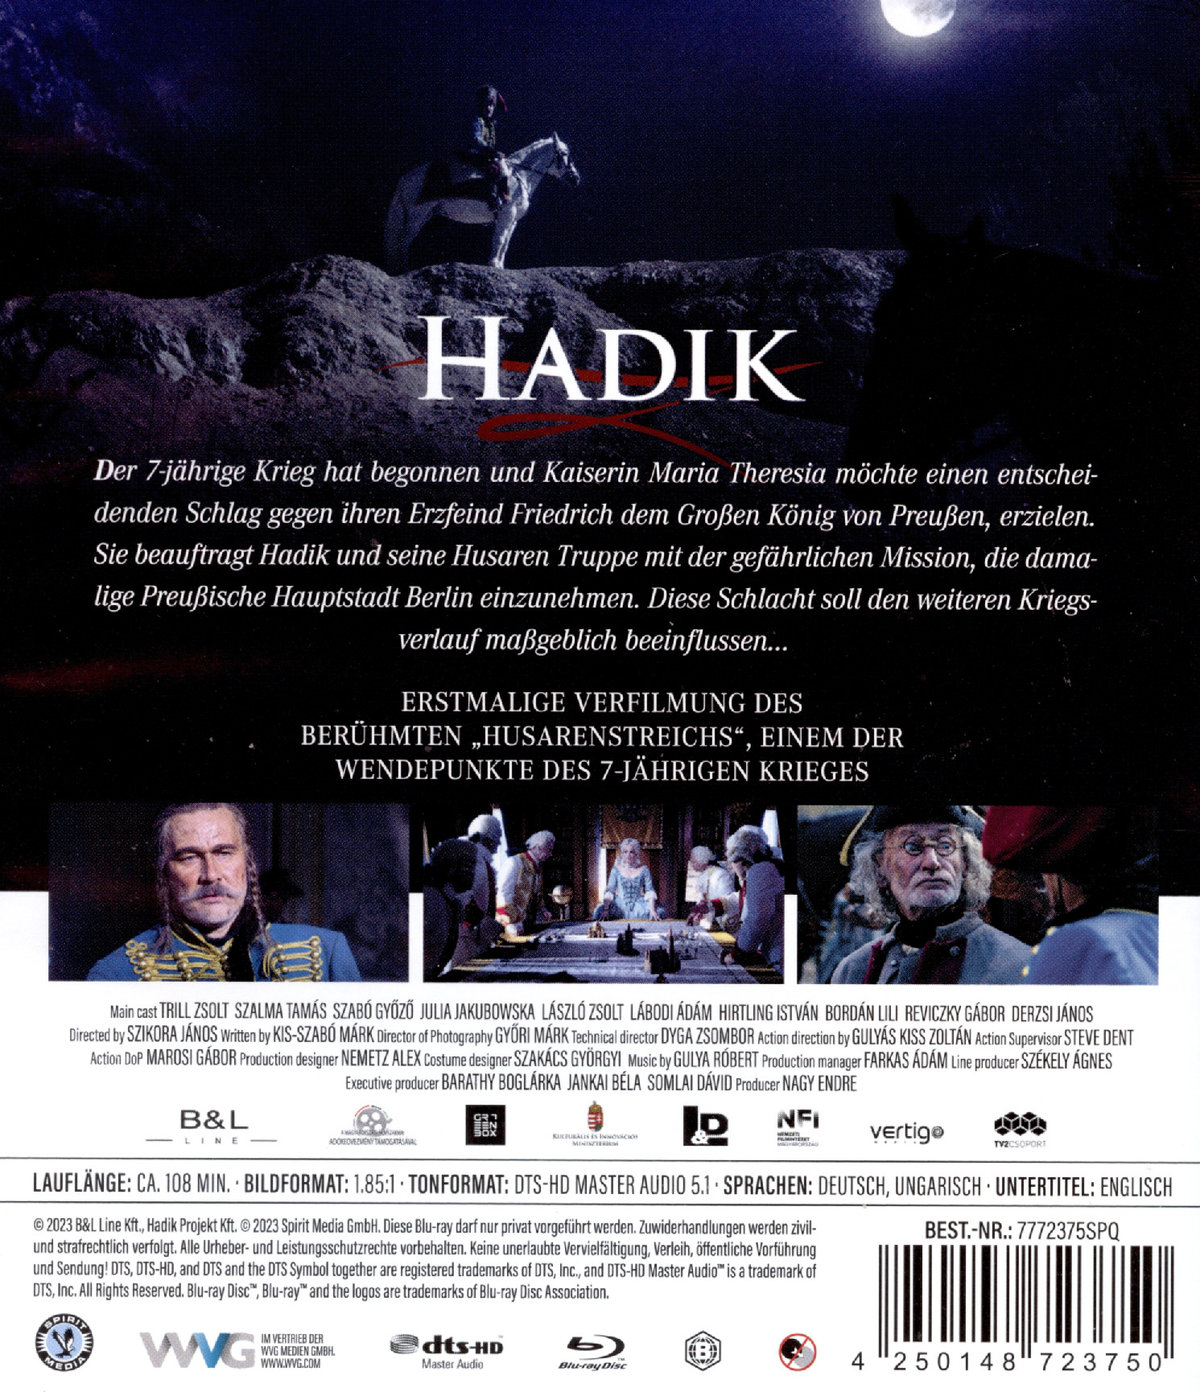 Hadik - Der legendäre Husaren General (blu-ray)